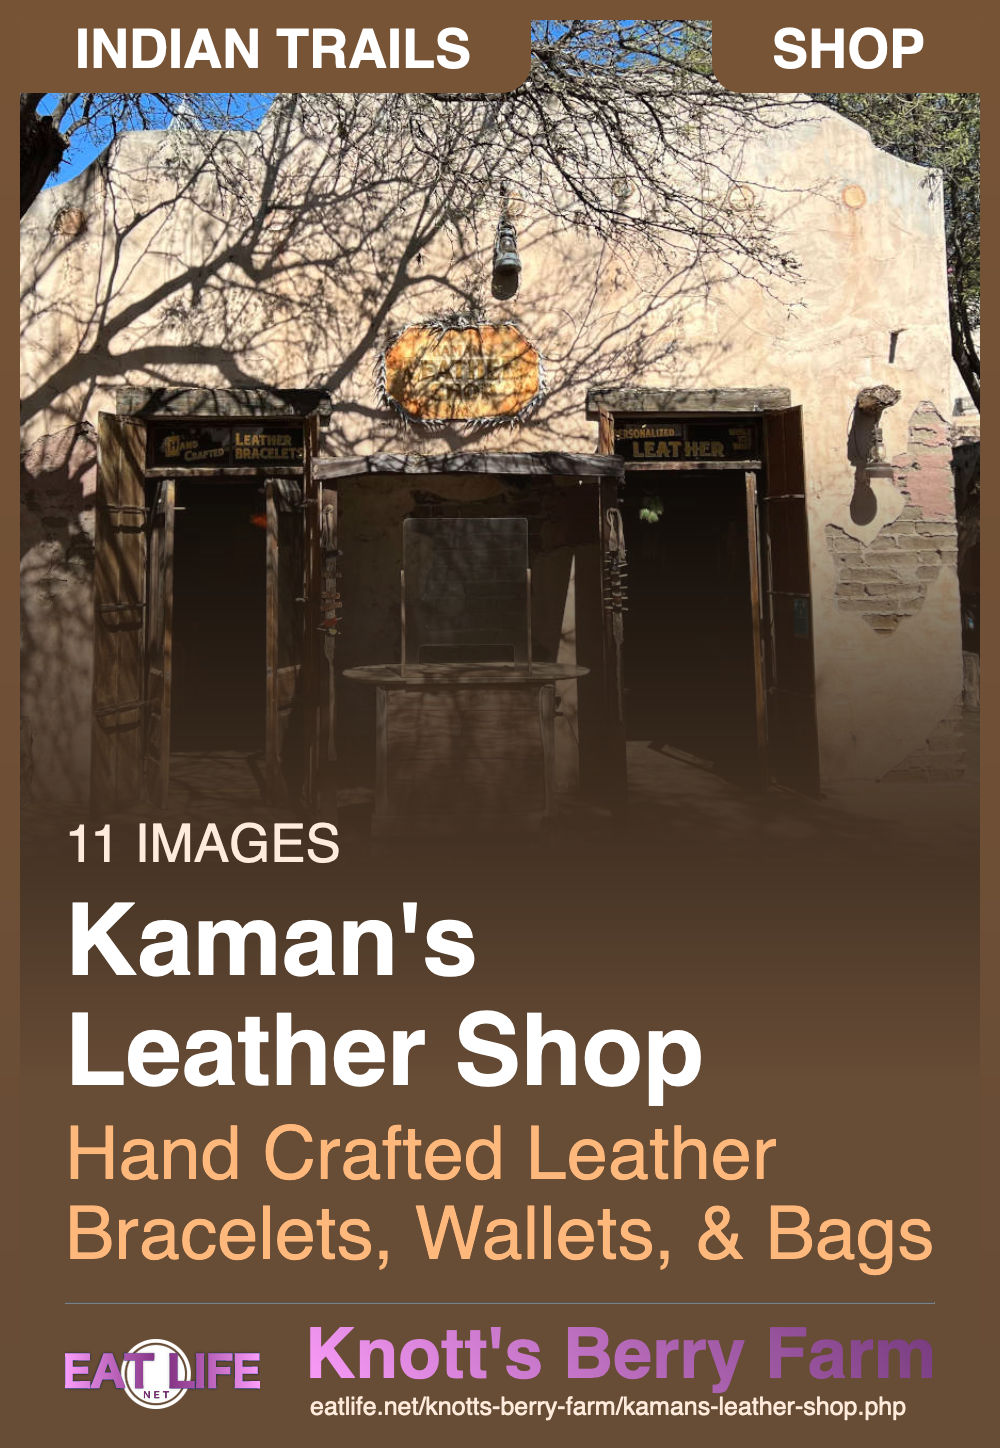 Kaman's Leather Shop